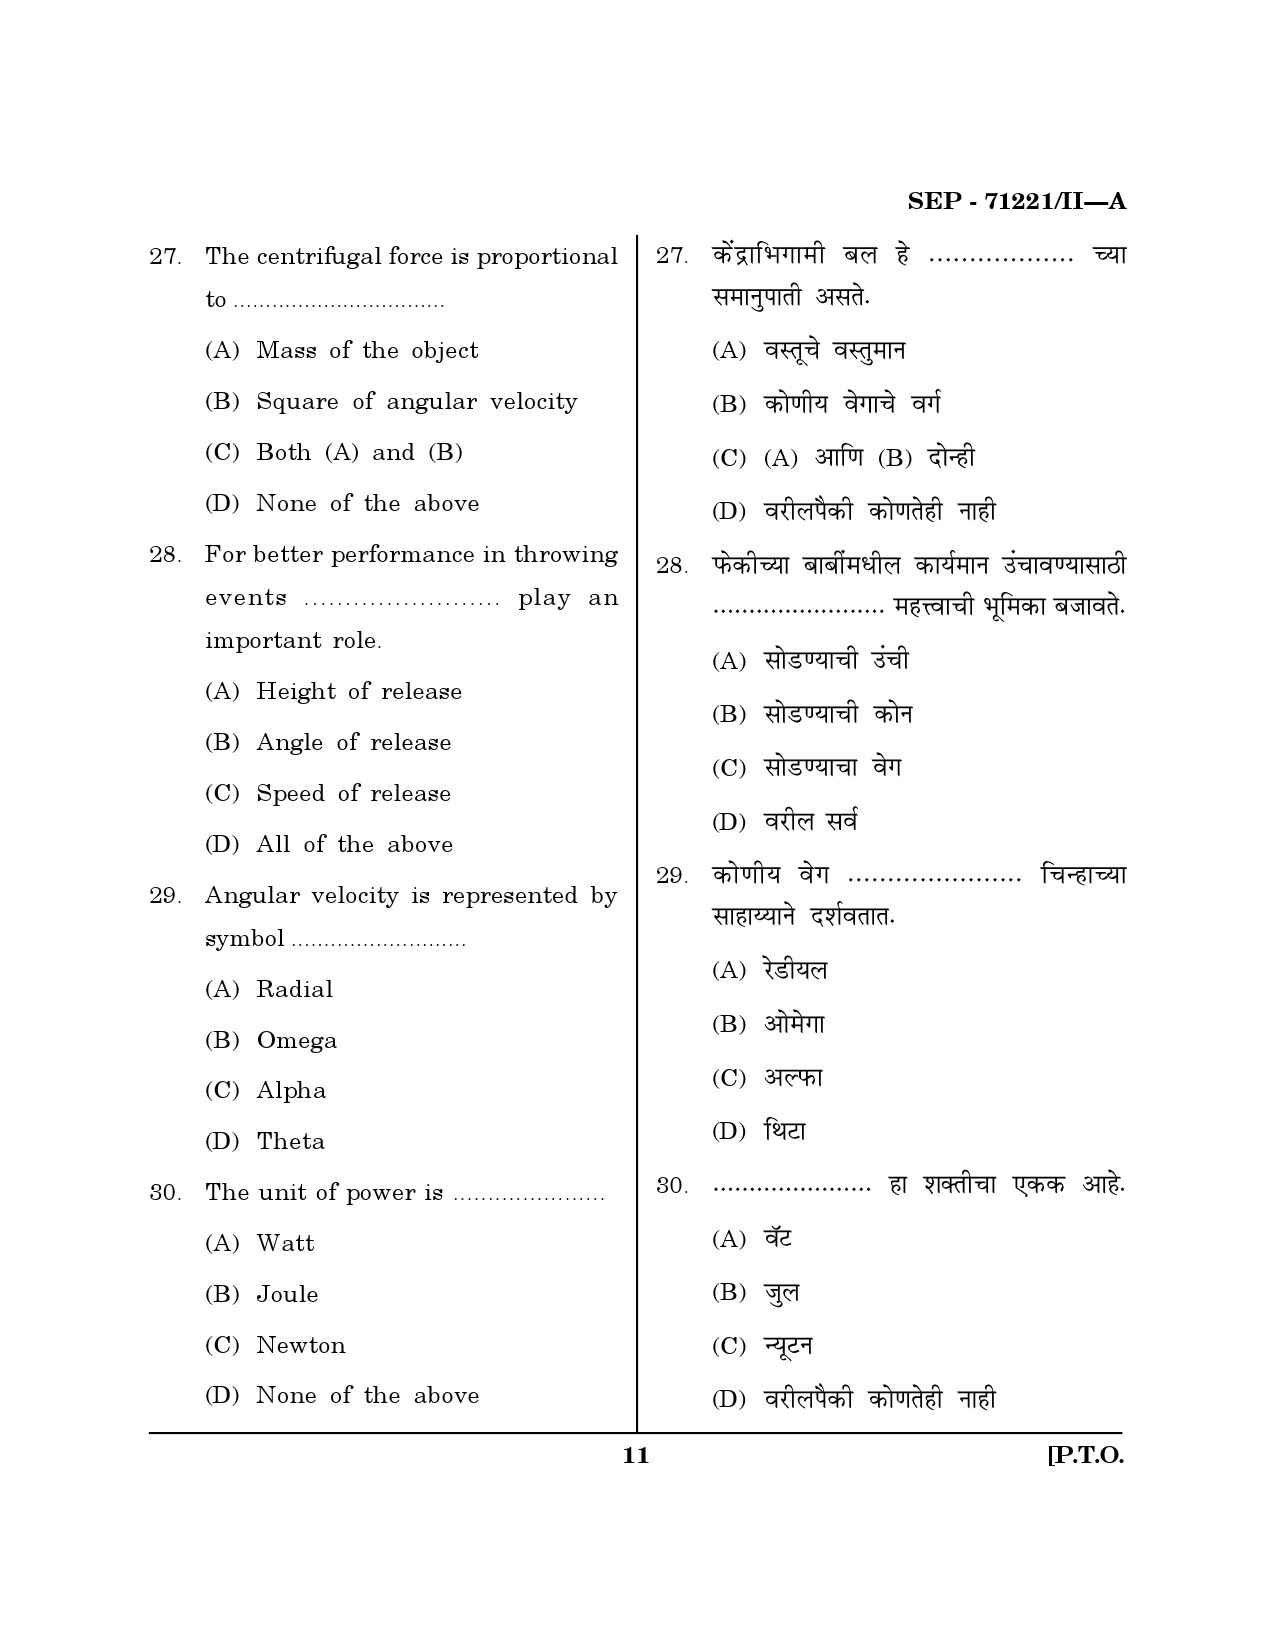 Maharashtra SET Physical Education Exam Question Paper September 2021 10